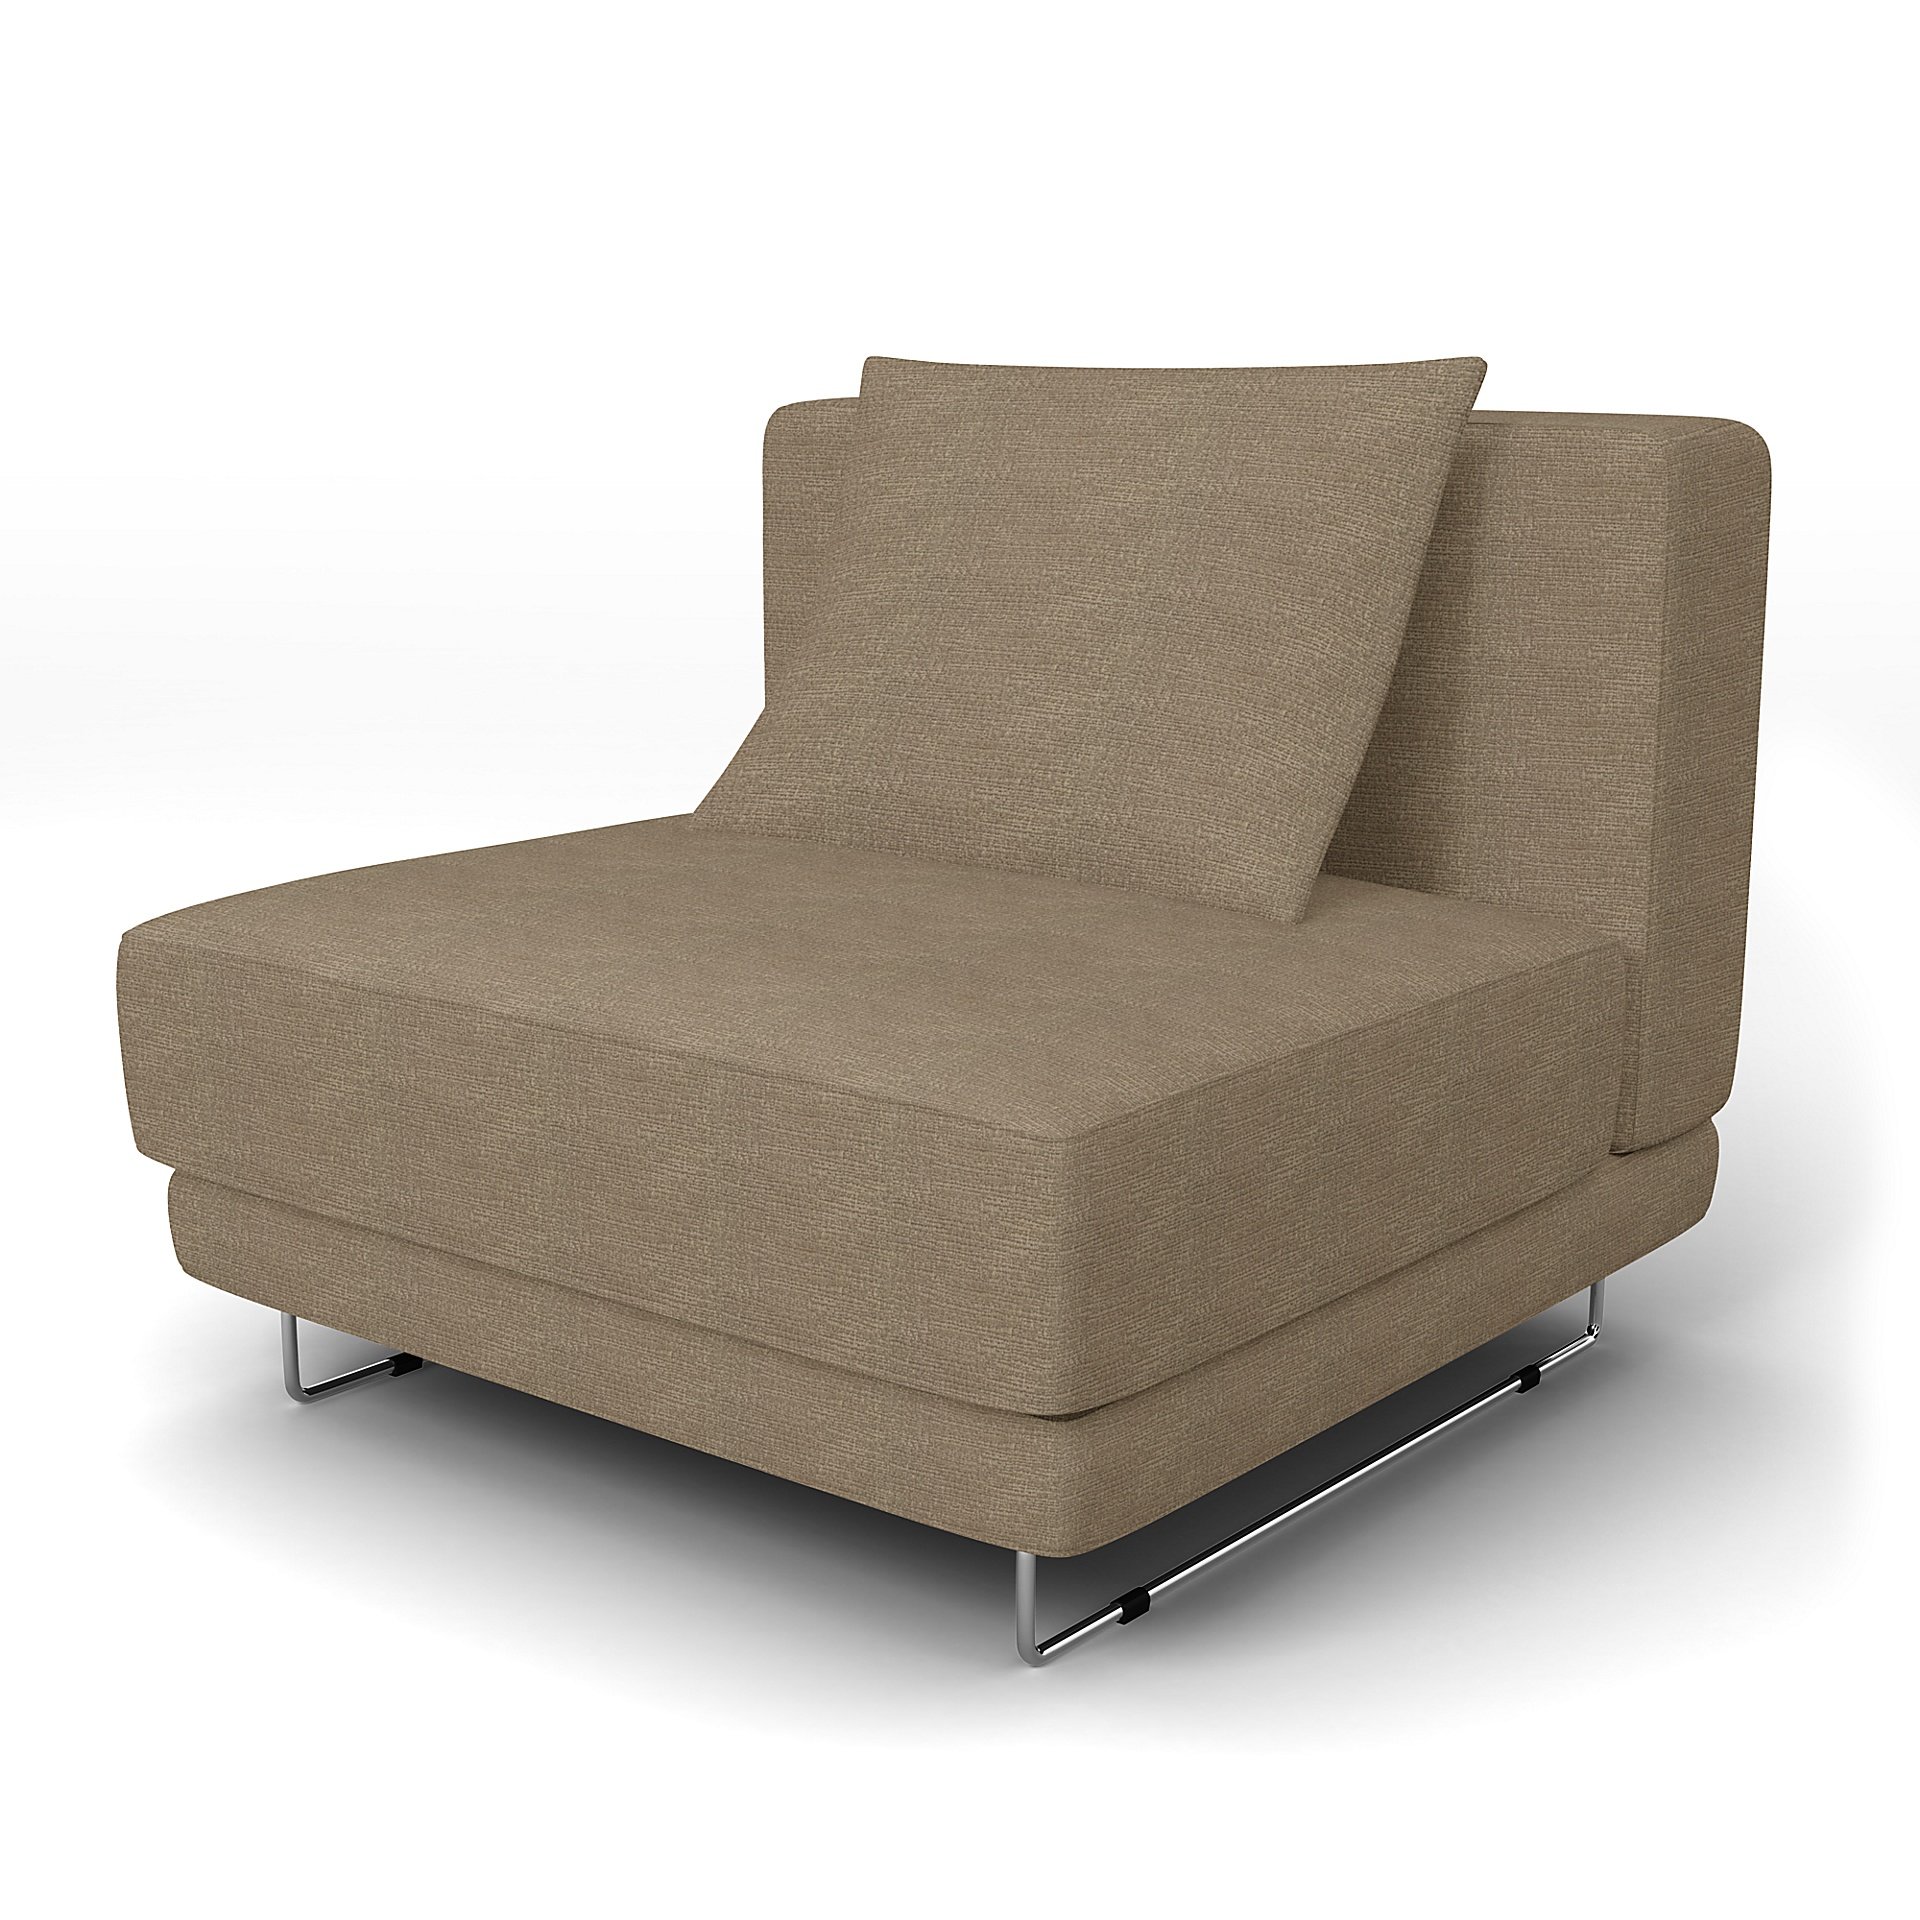 IKEA - Tylosand 1 Seat Module Cover, Camel, Boucle & Texture - Bemz